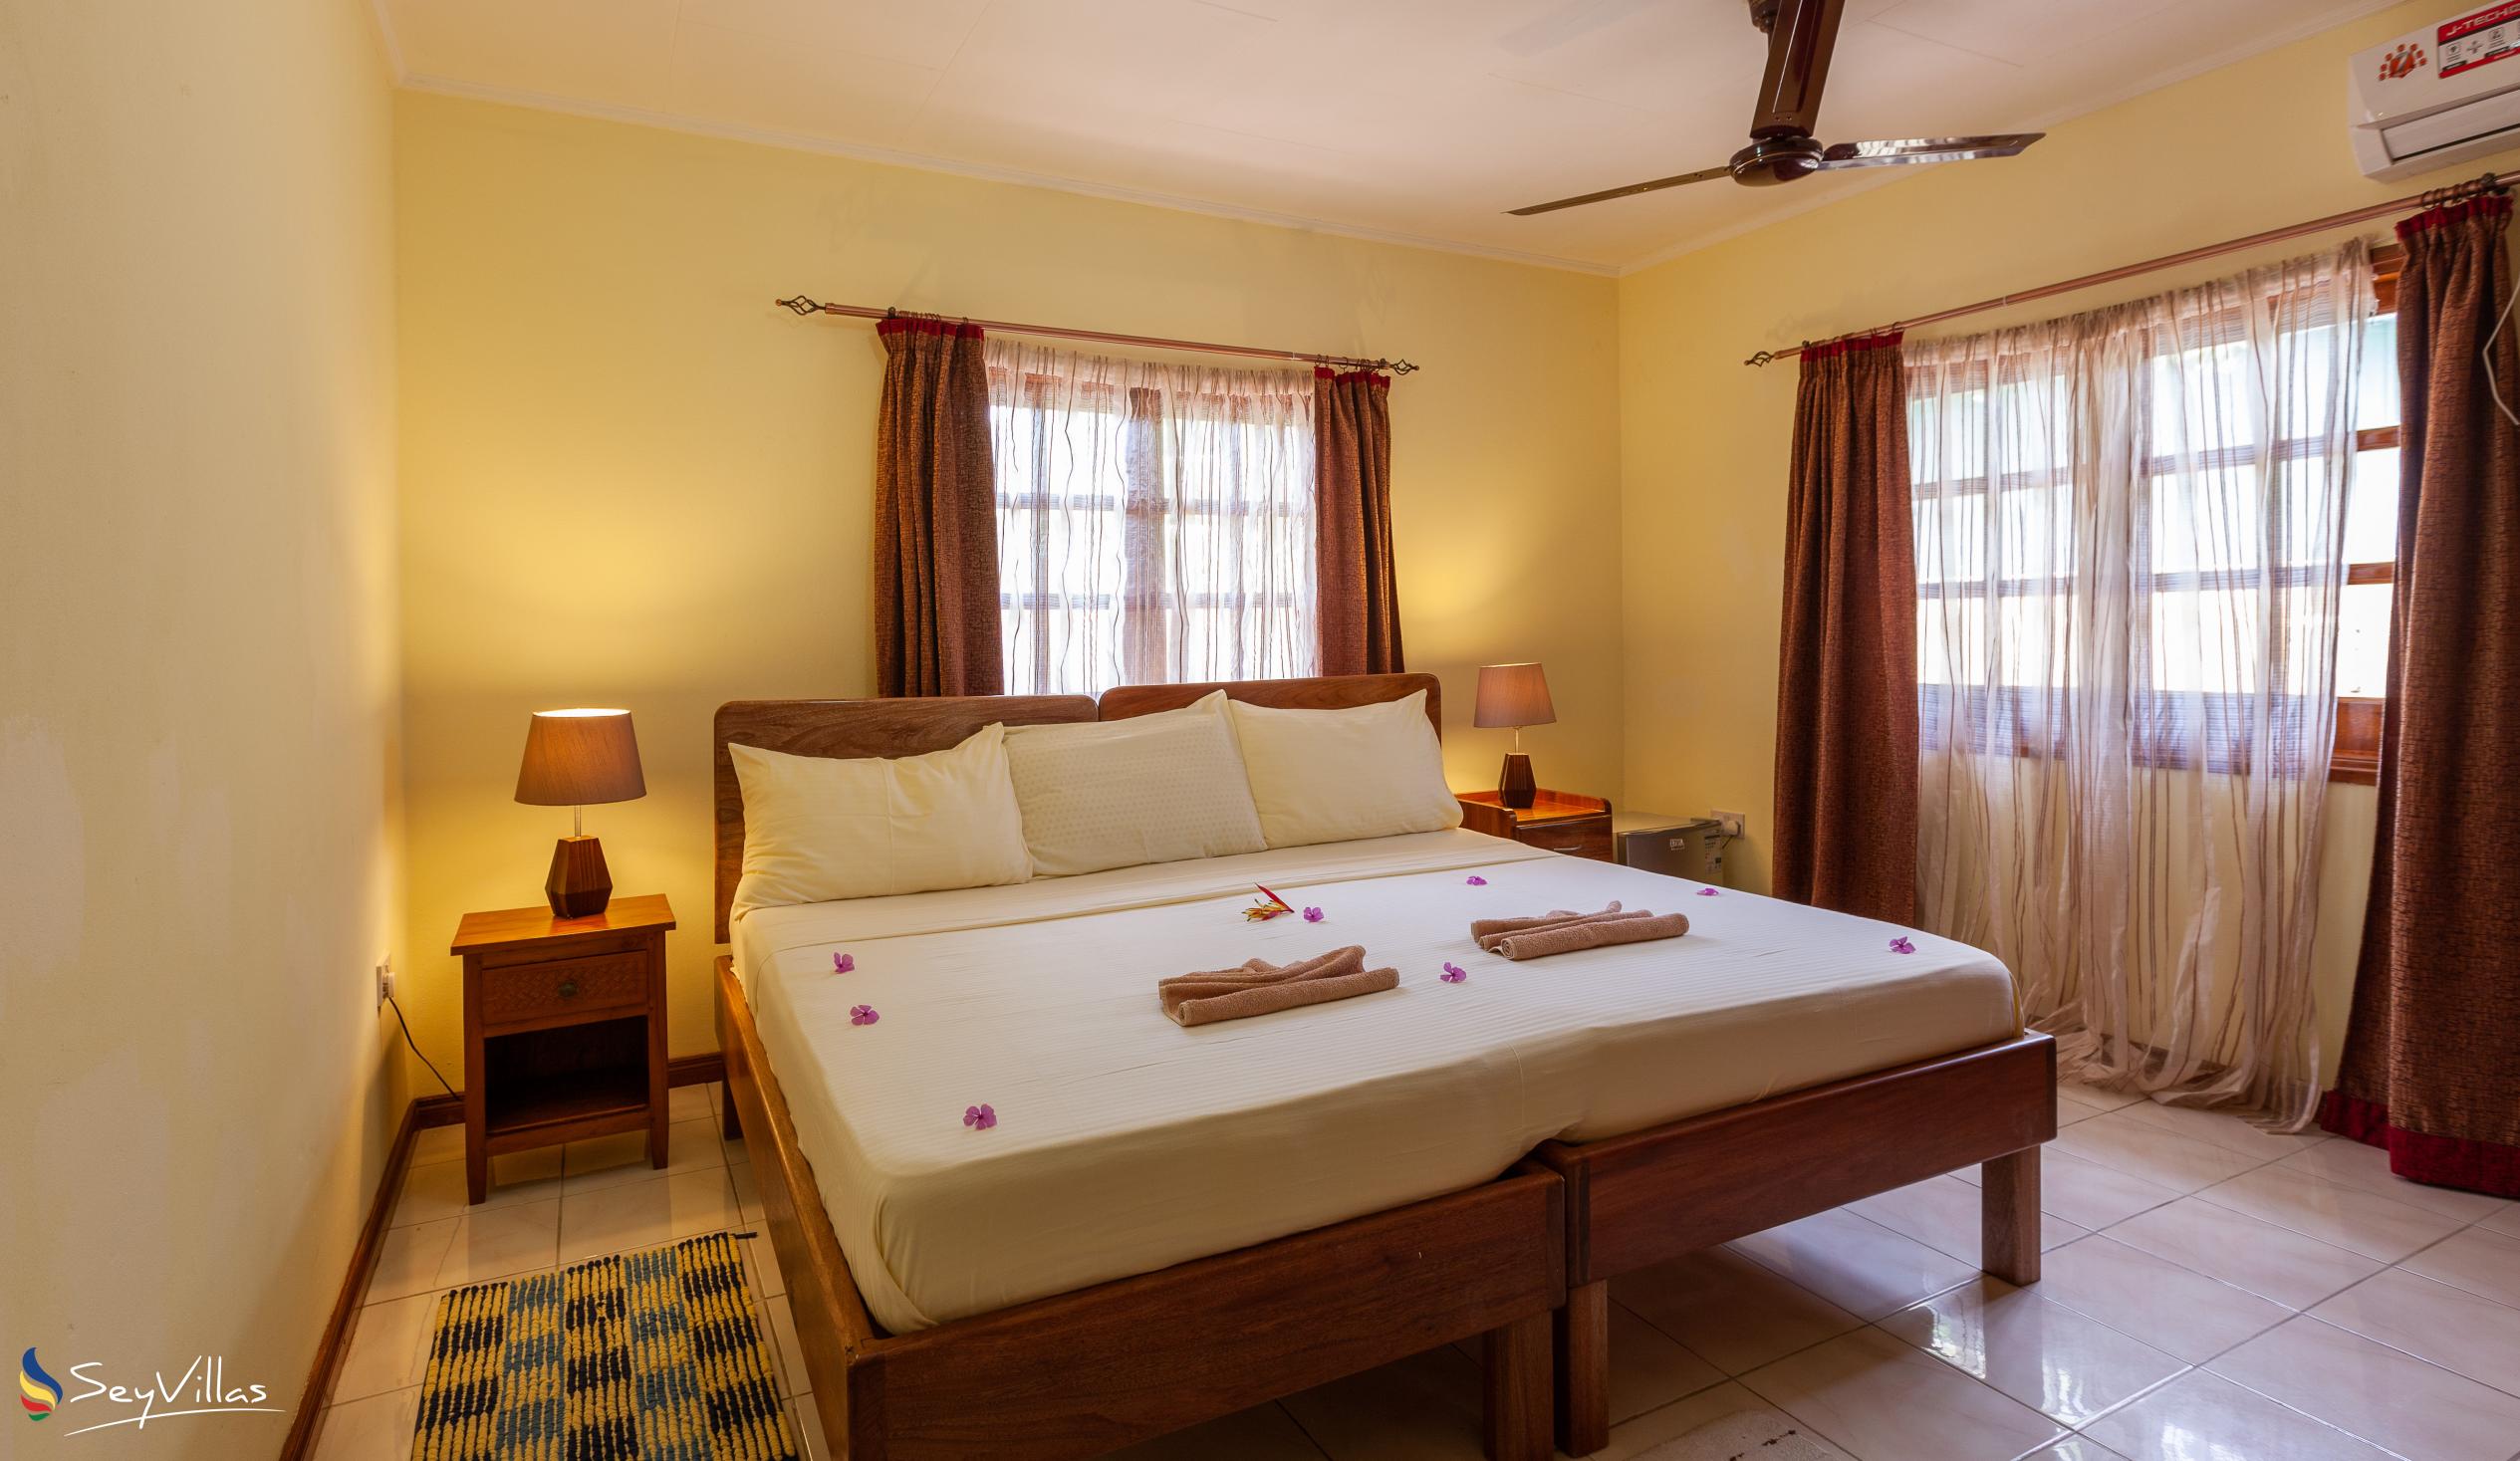 Photo 65: Villa Bananier - Double Room Villa Annex - Praslin (Seychelles)